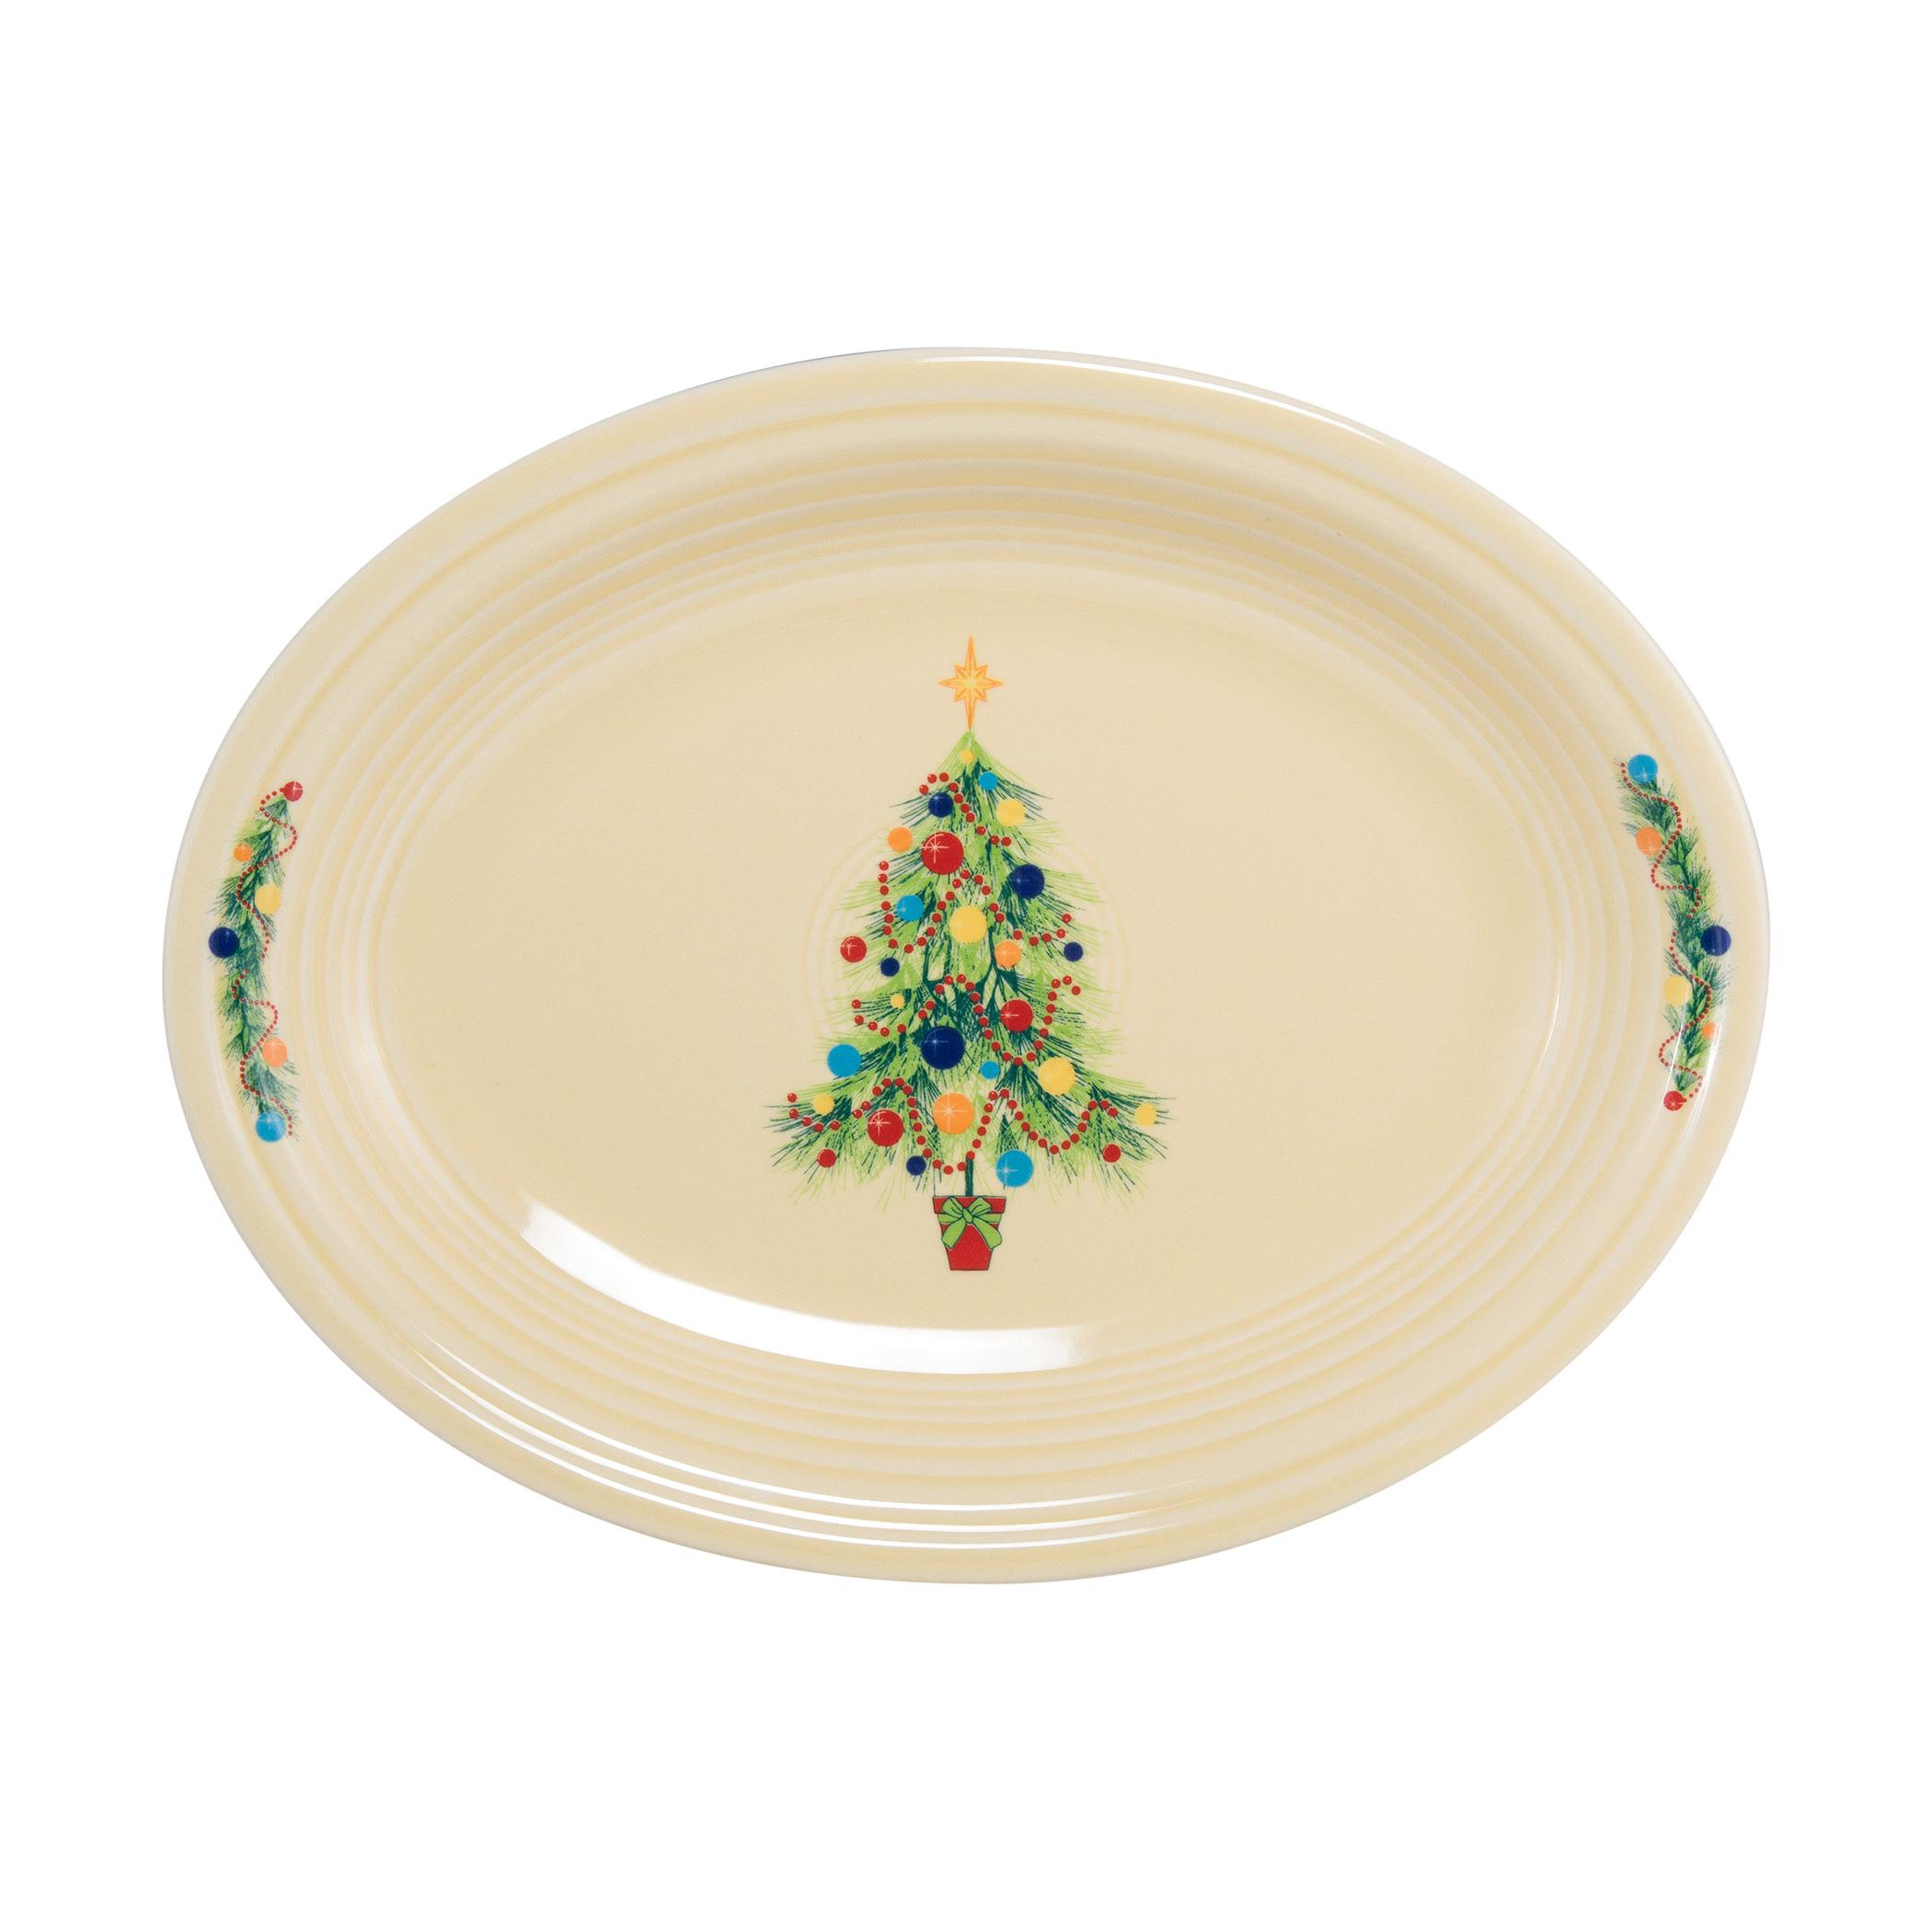  Christmas Tree Oval Platter